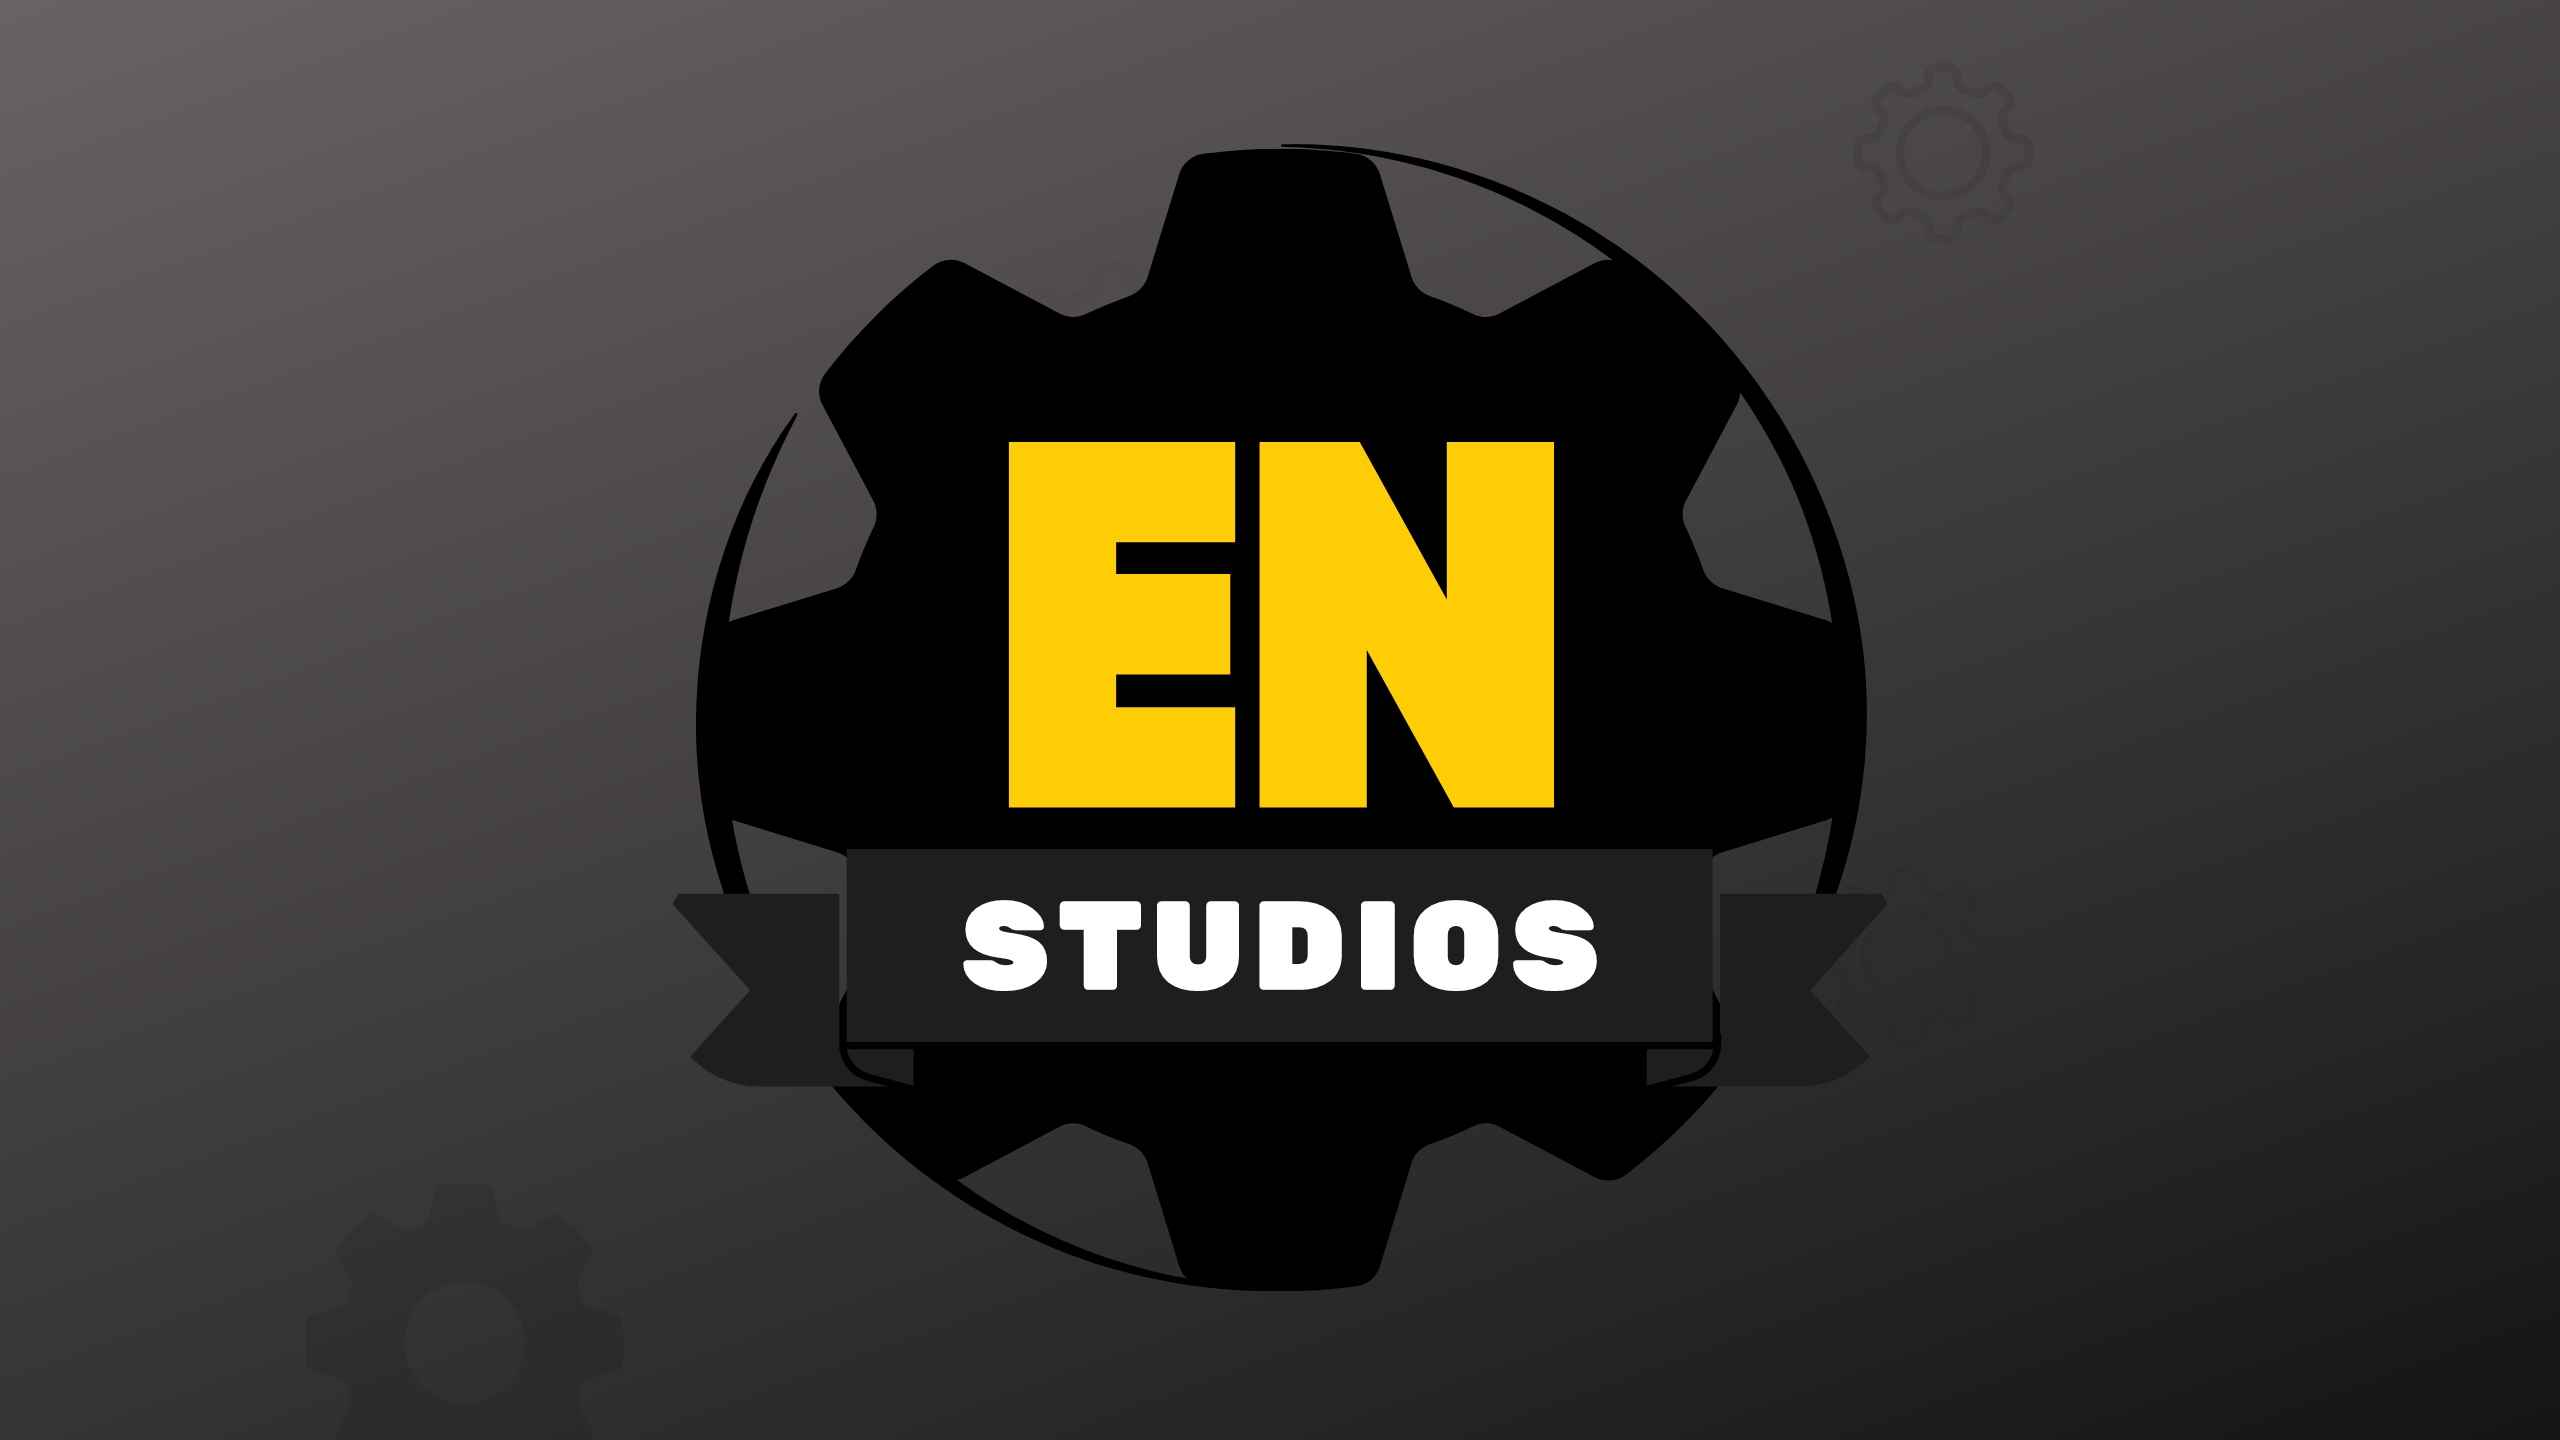 Engine Studios